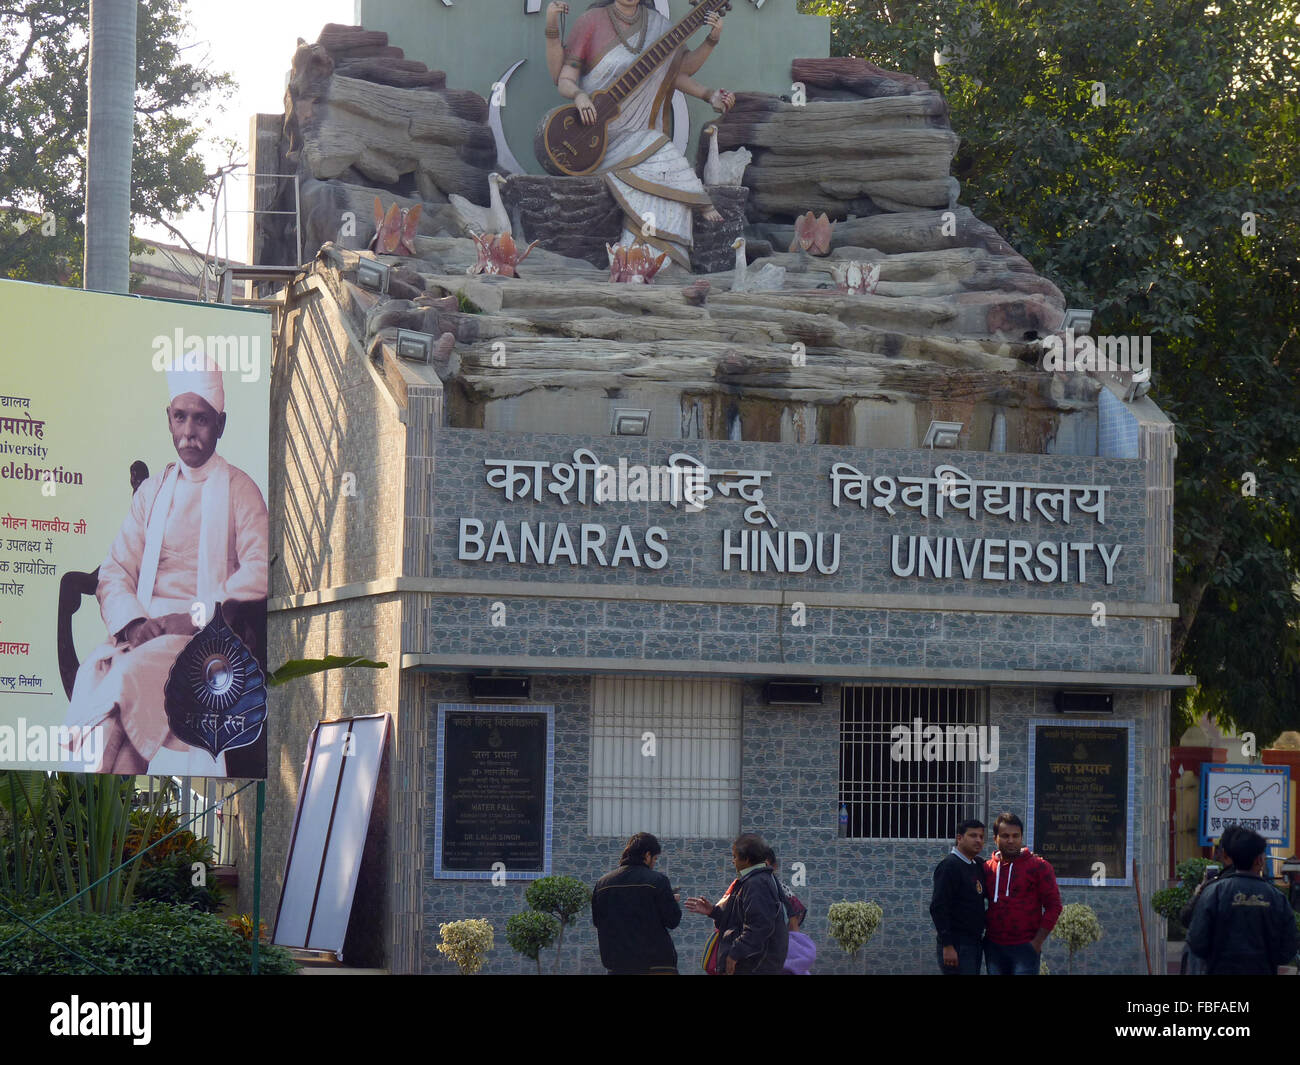 Faculty of Law, Banaras Hindu University, Varanasi - News and Notifications  2023-2024